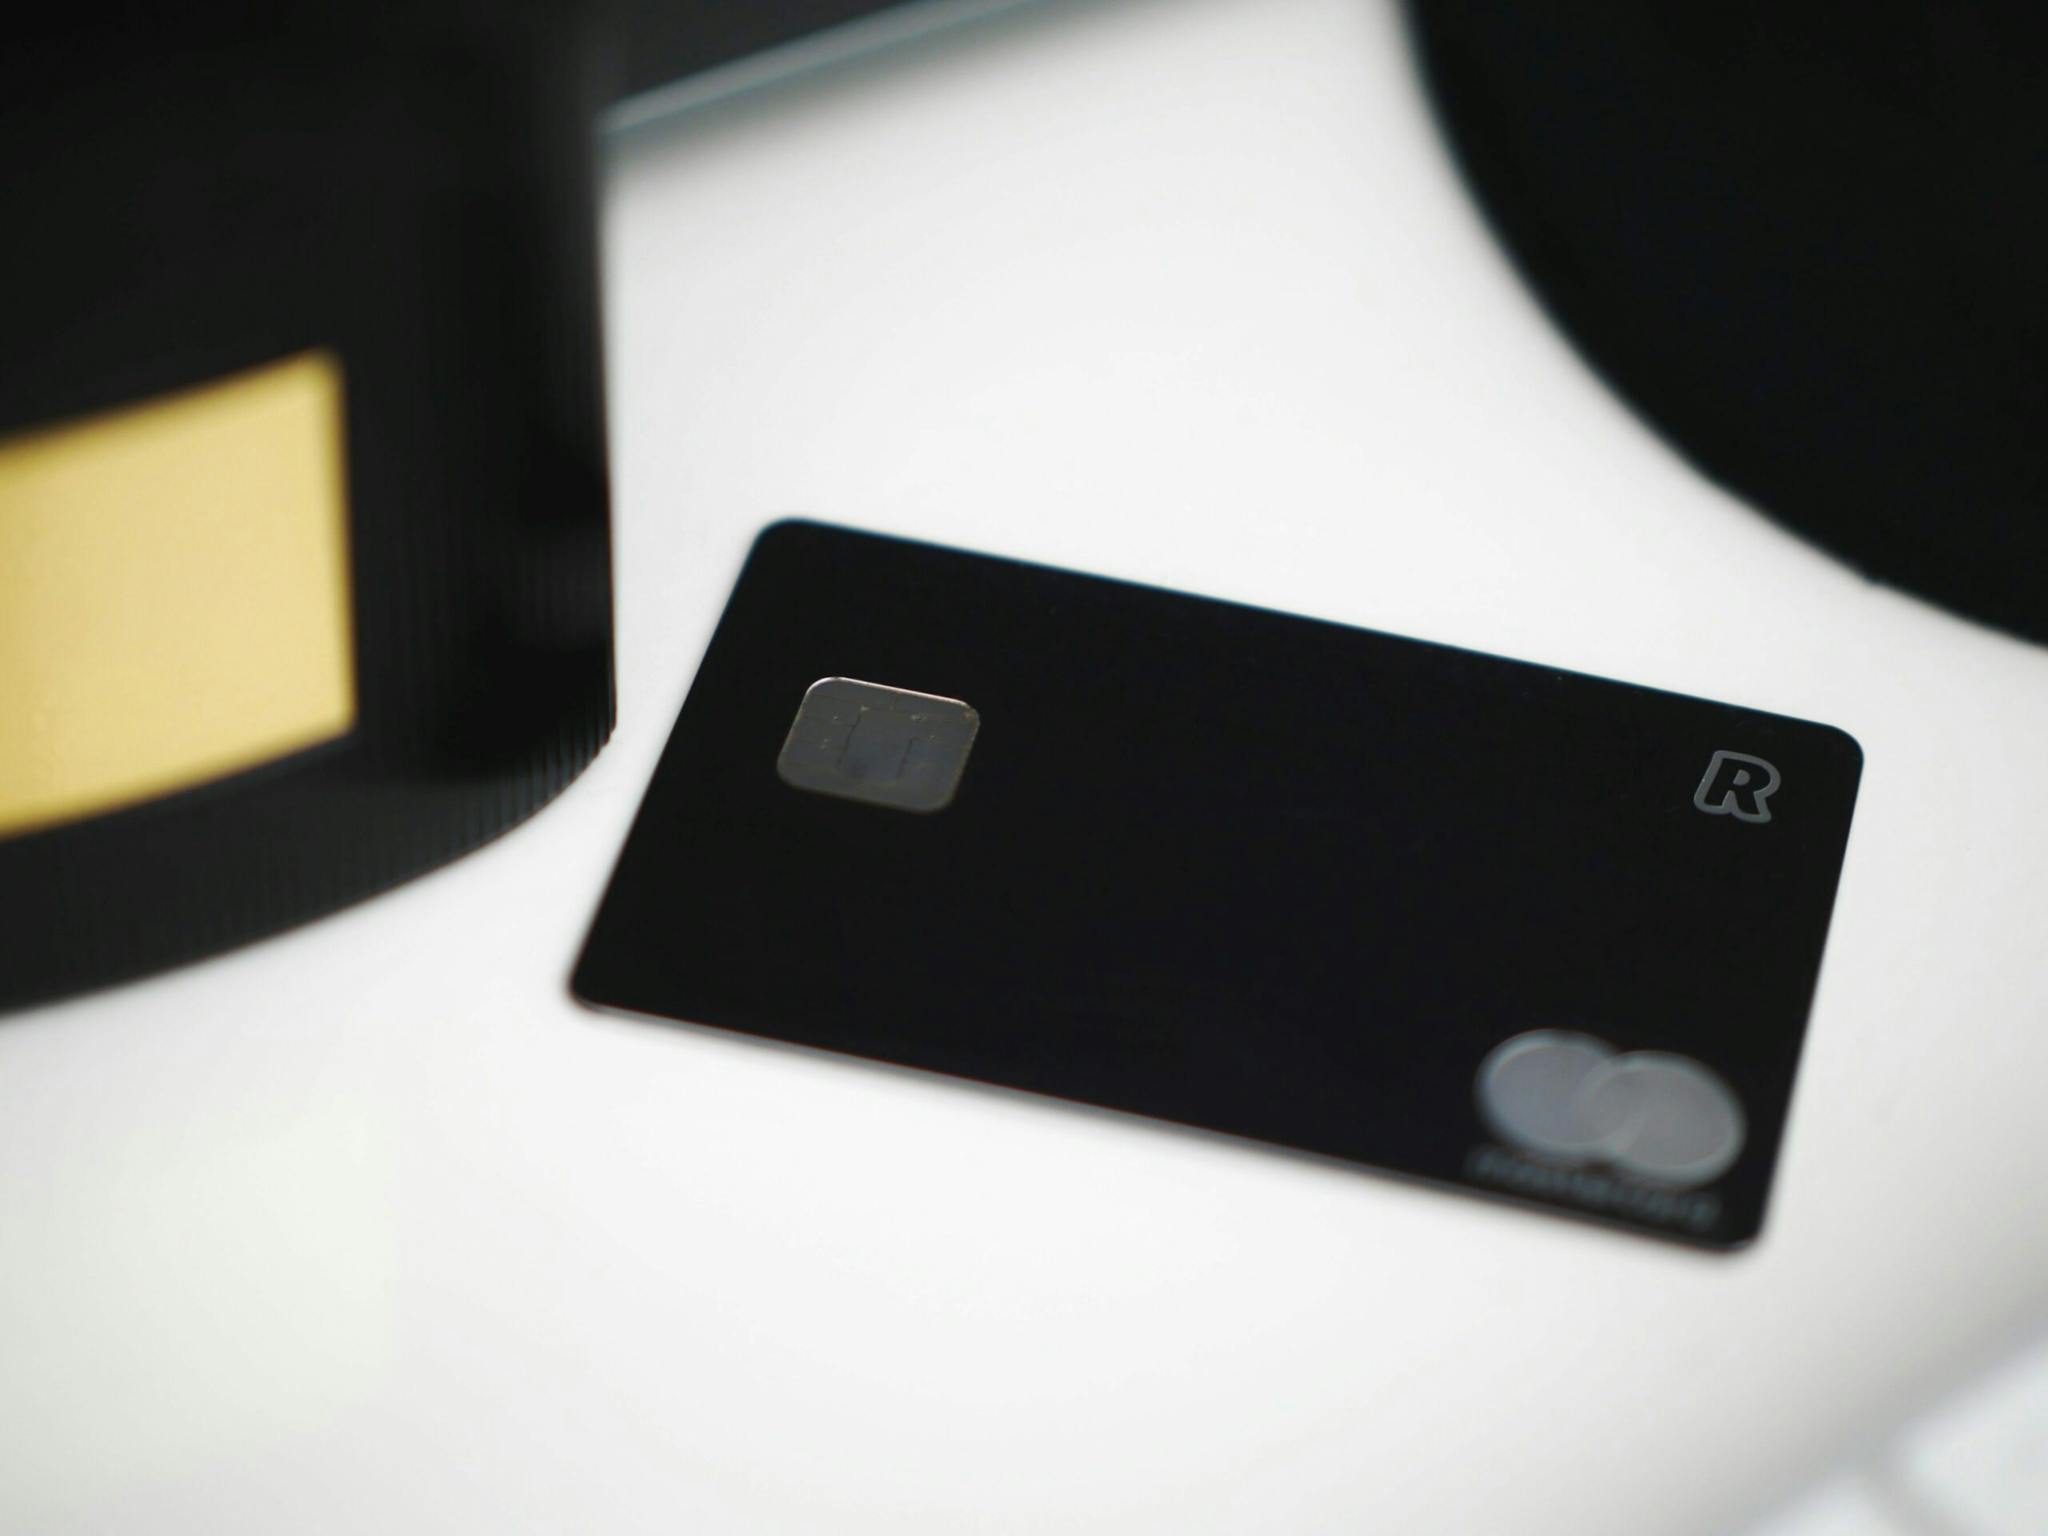 A black credit card resting on a white surface, exuding elegance and sophistication.